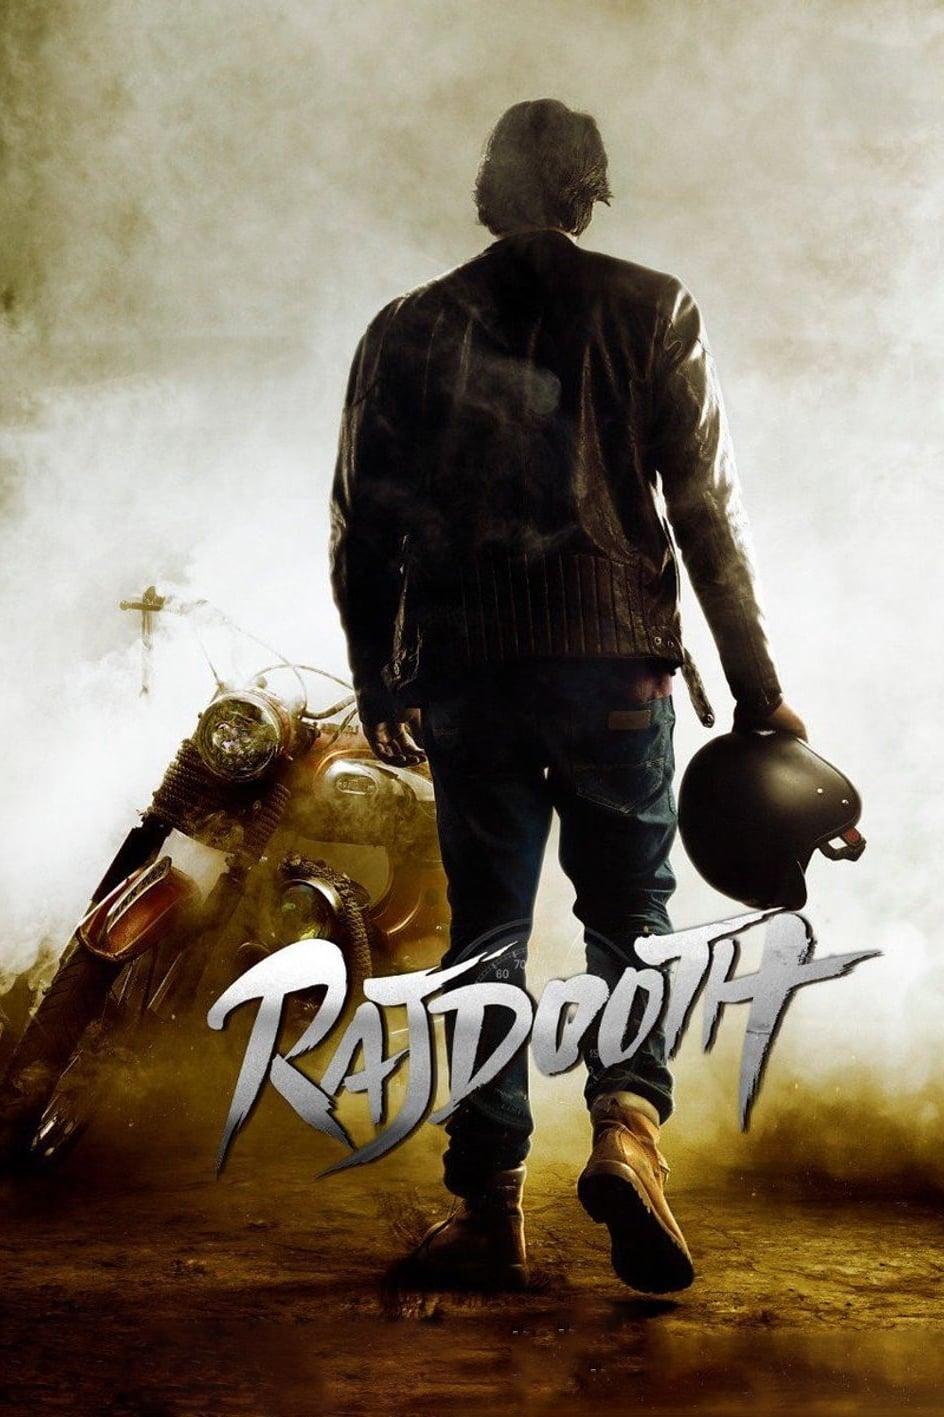 Rajdooth poster